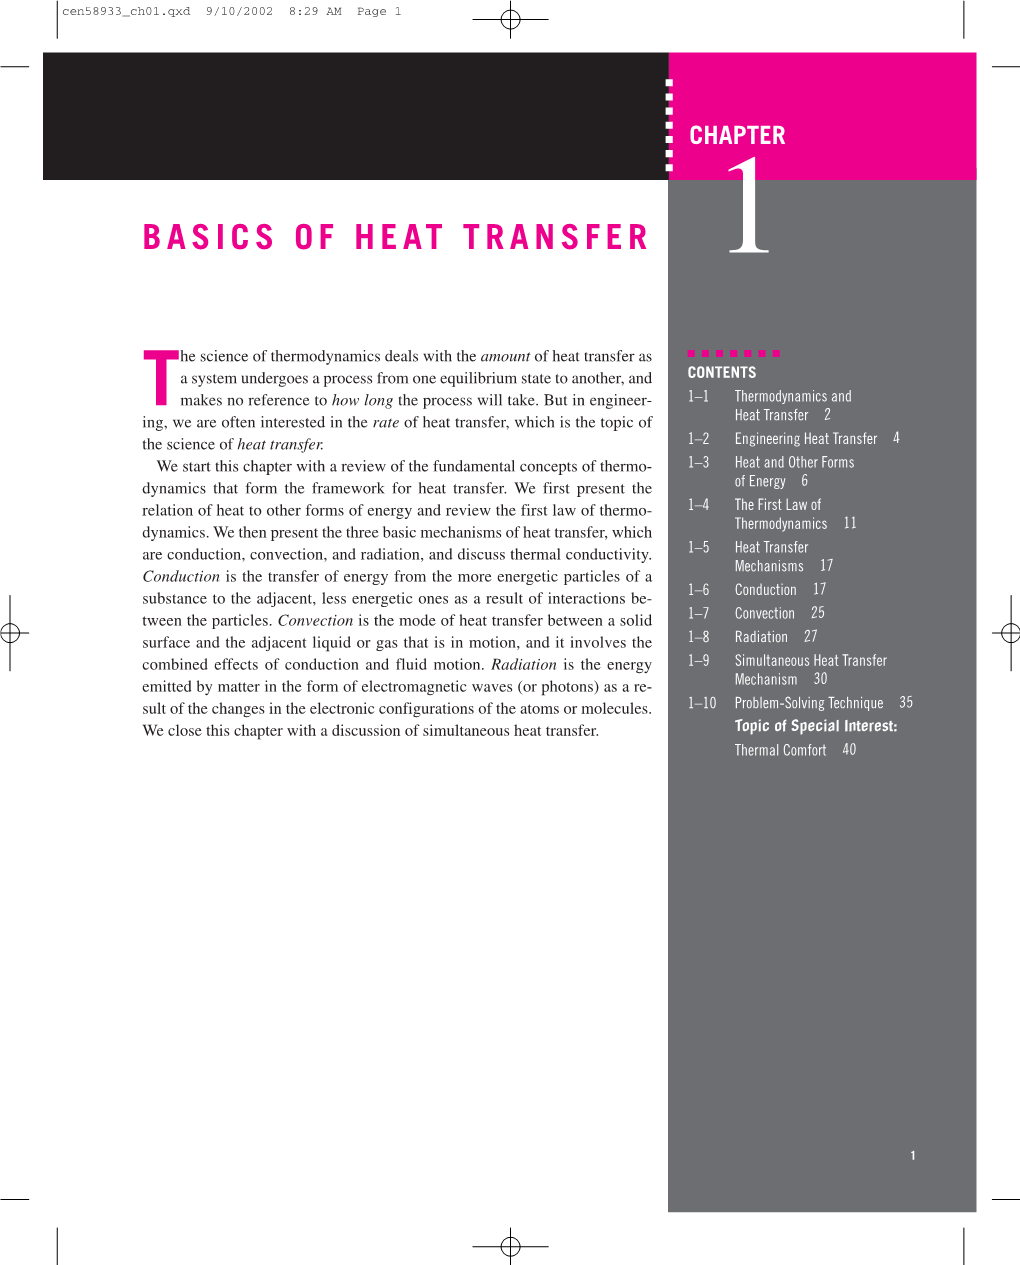 Basics of Heat Transfer 1